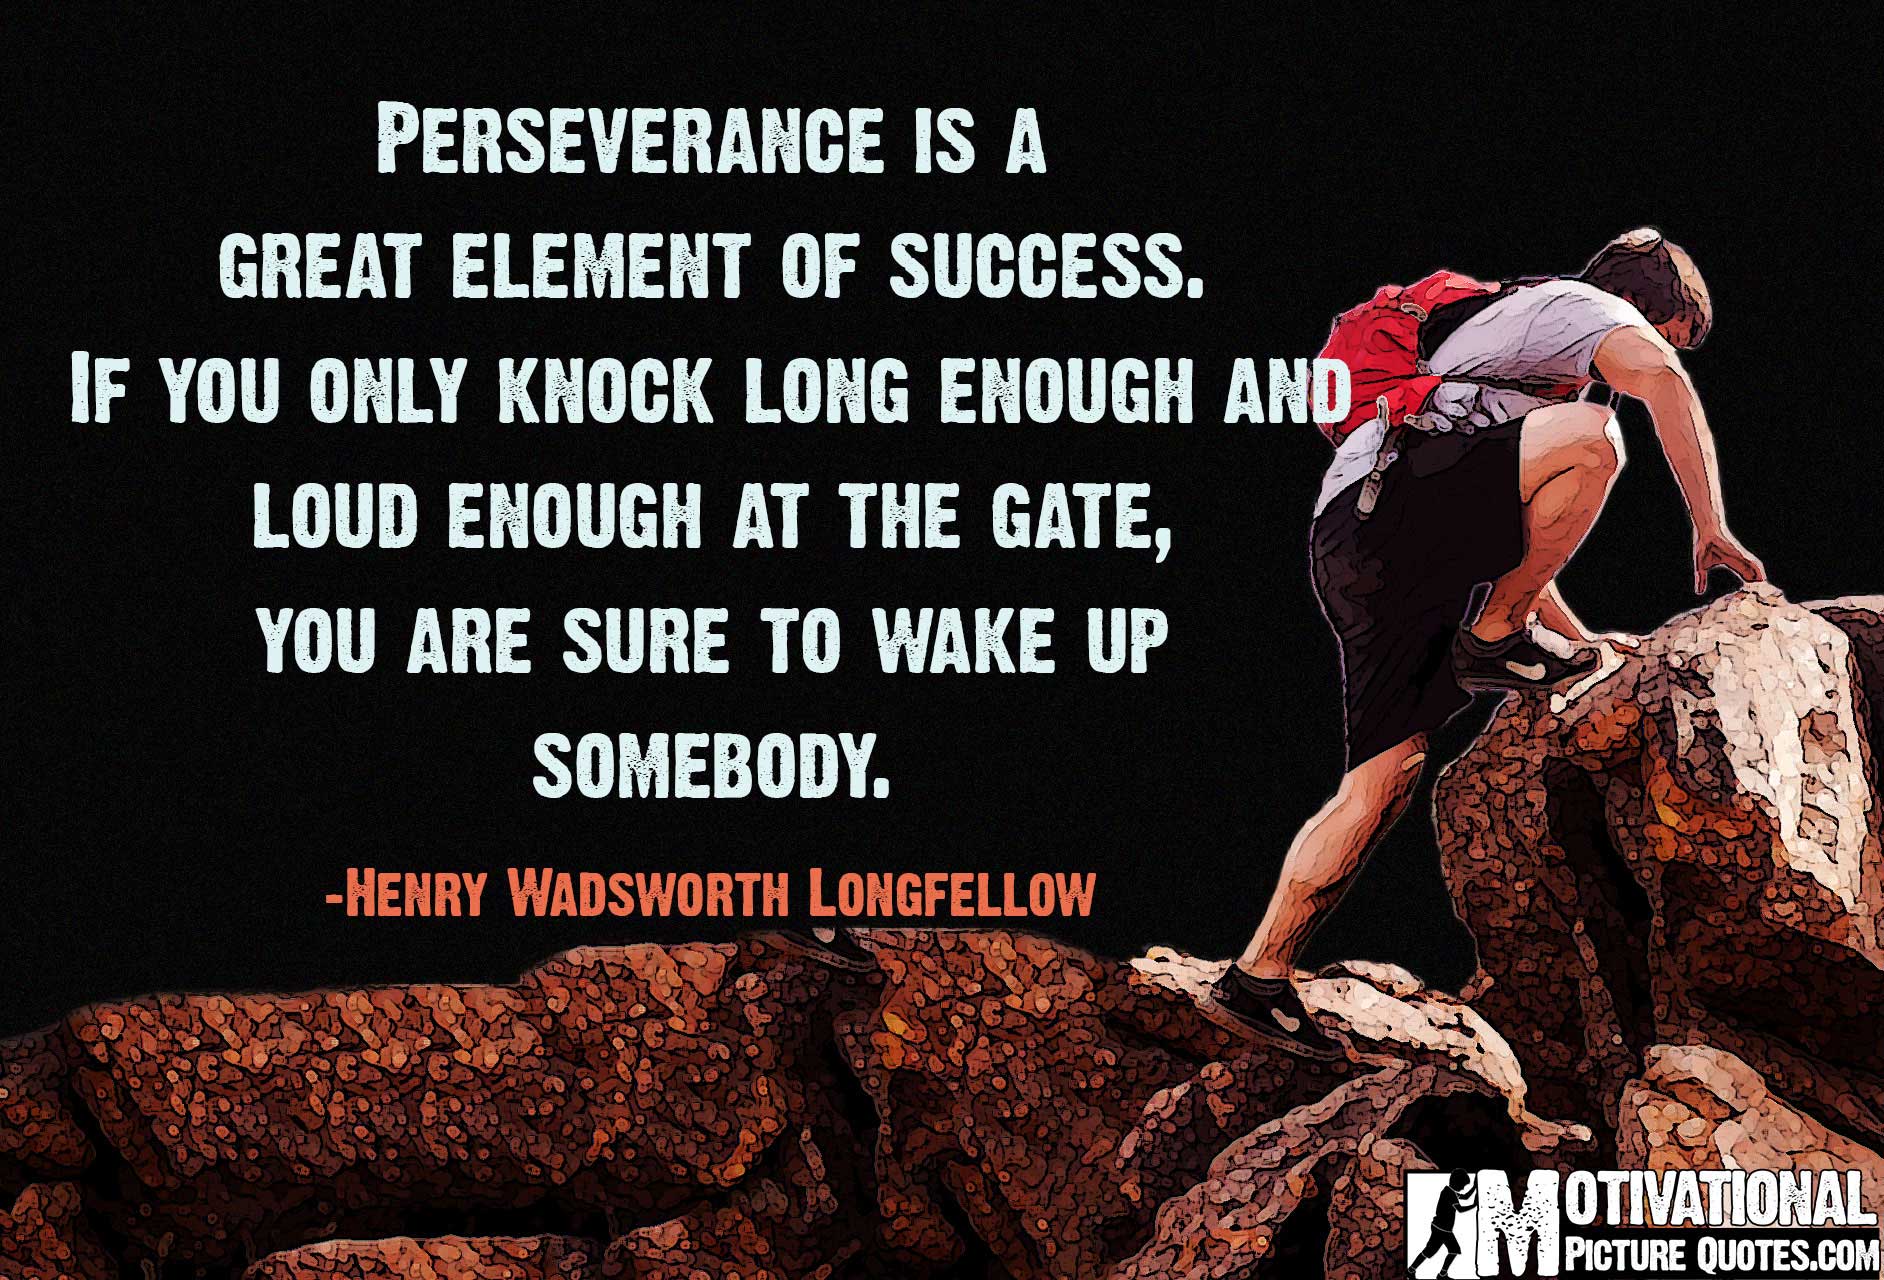 theme of perseverance essay